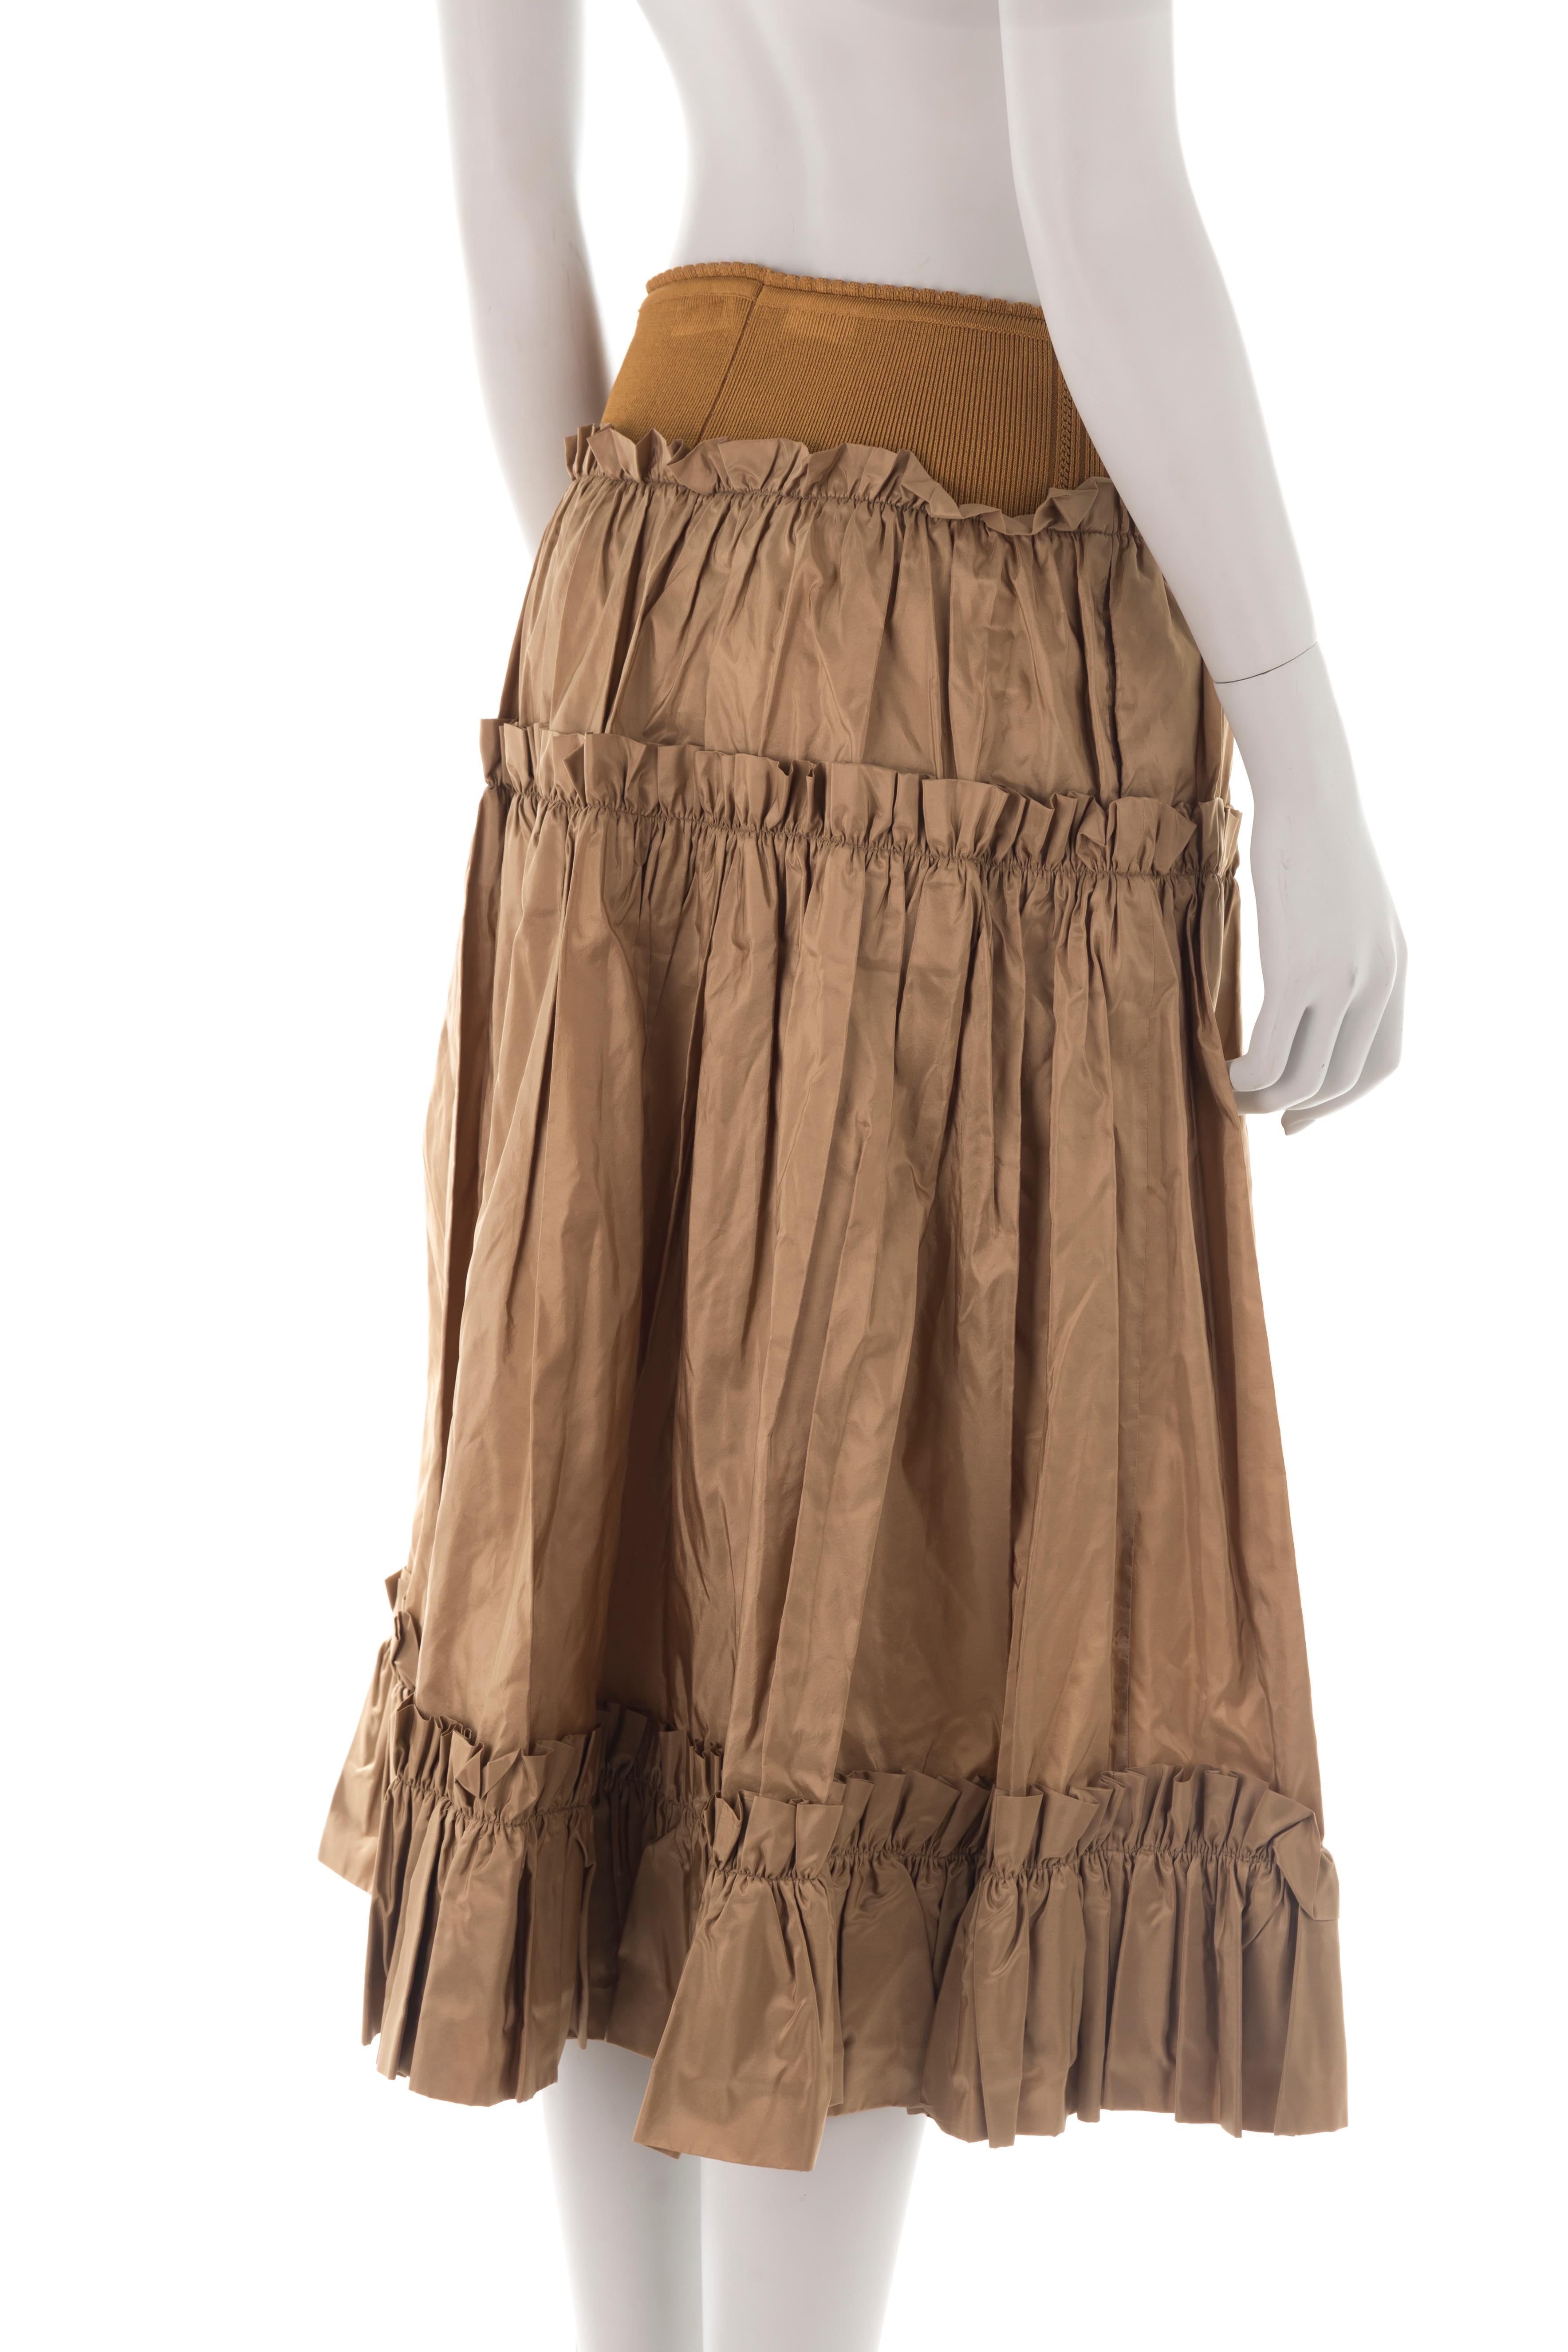 Brown Roberto Cavalli S/S 2005 khaki boho maxi skirt For Sale